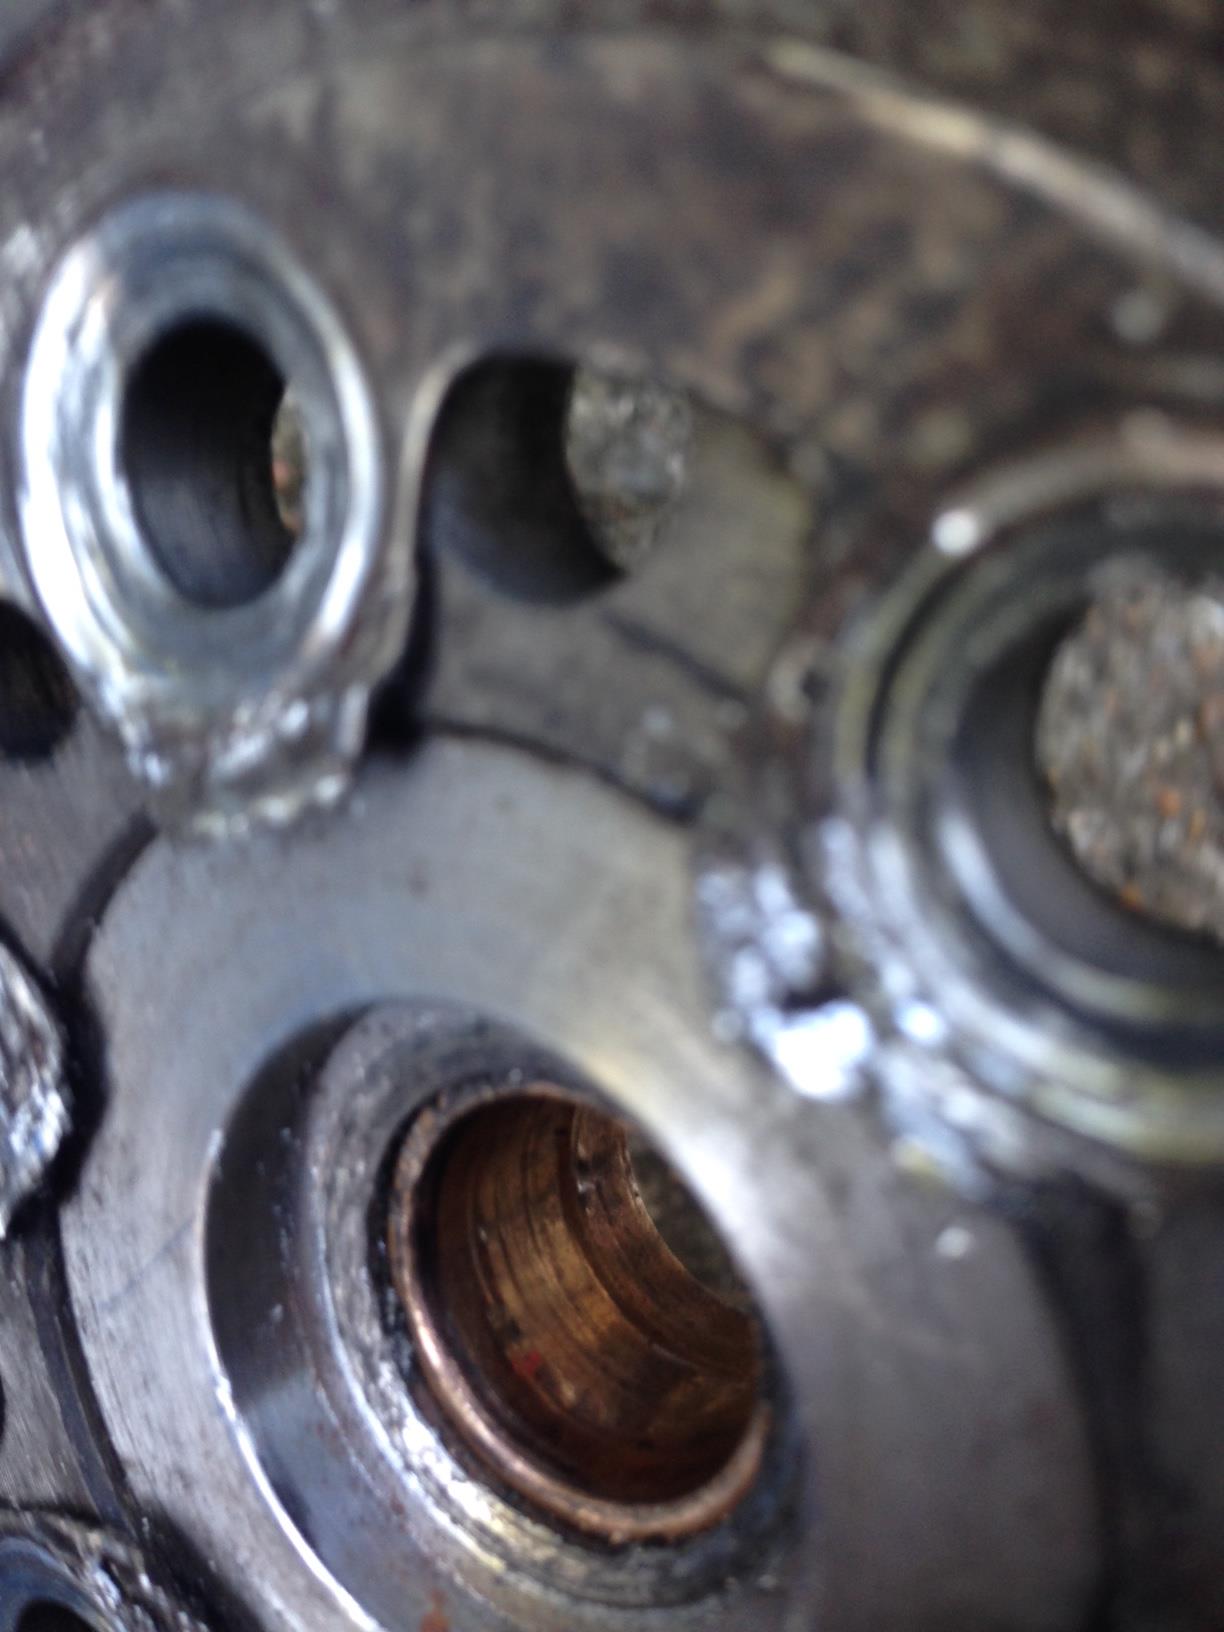 gearbox side of spigot bearing - see wear in the metal